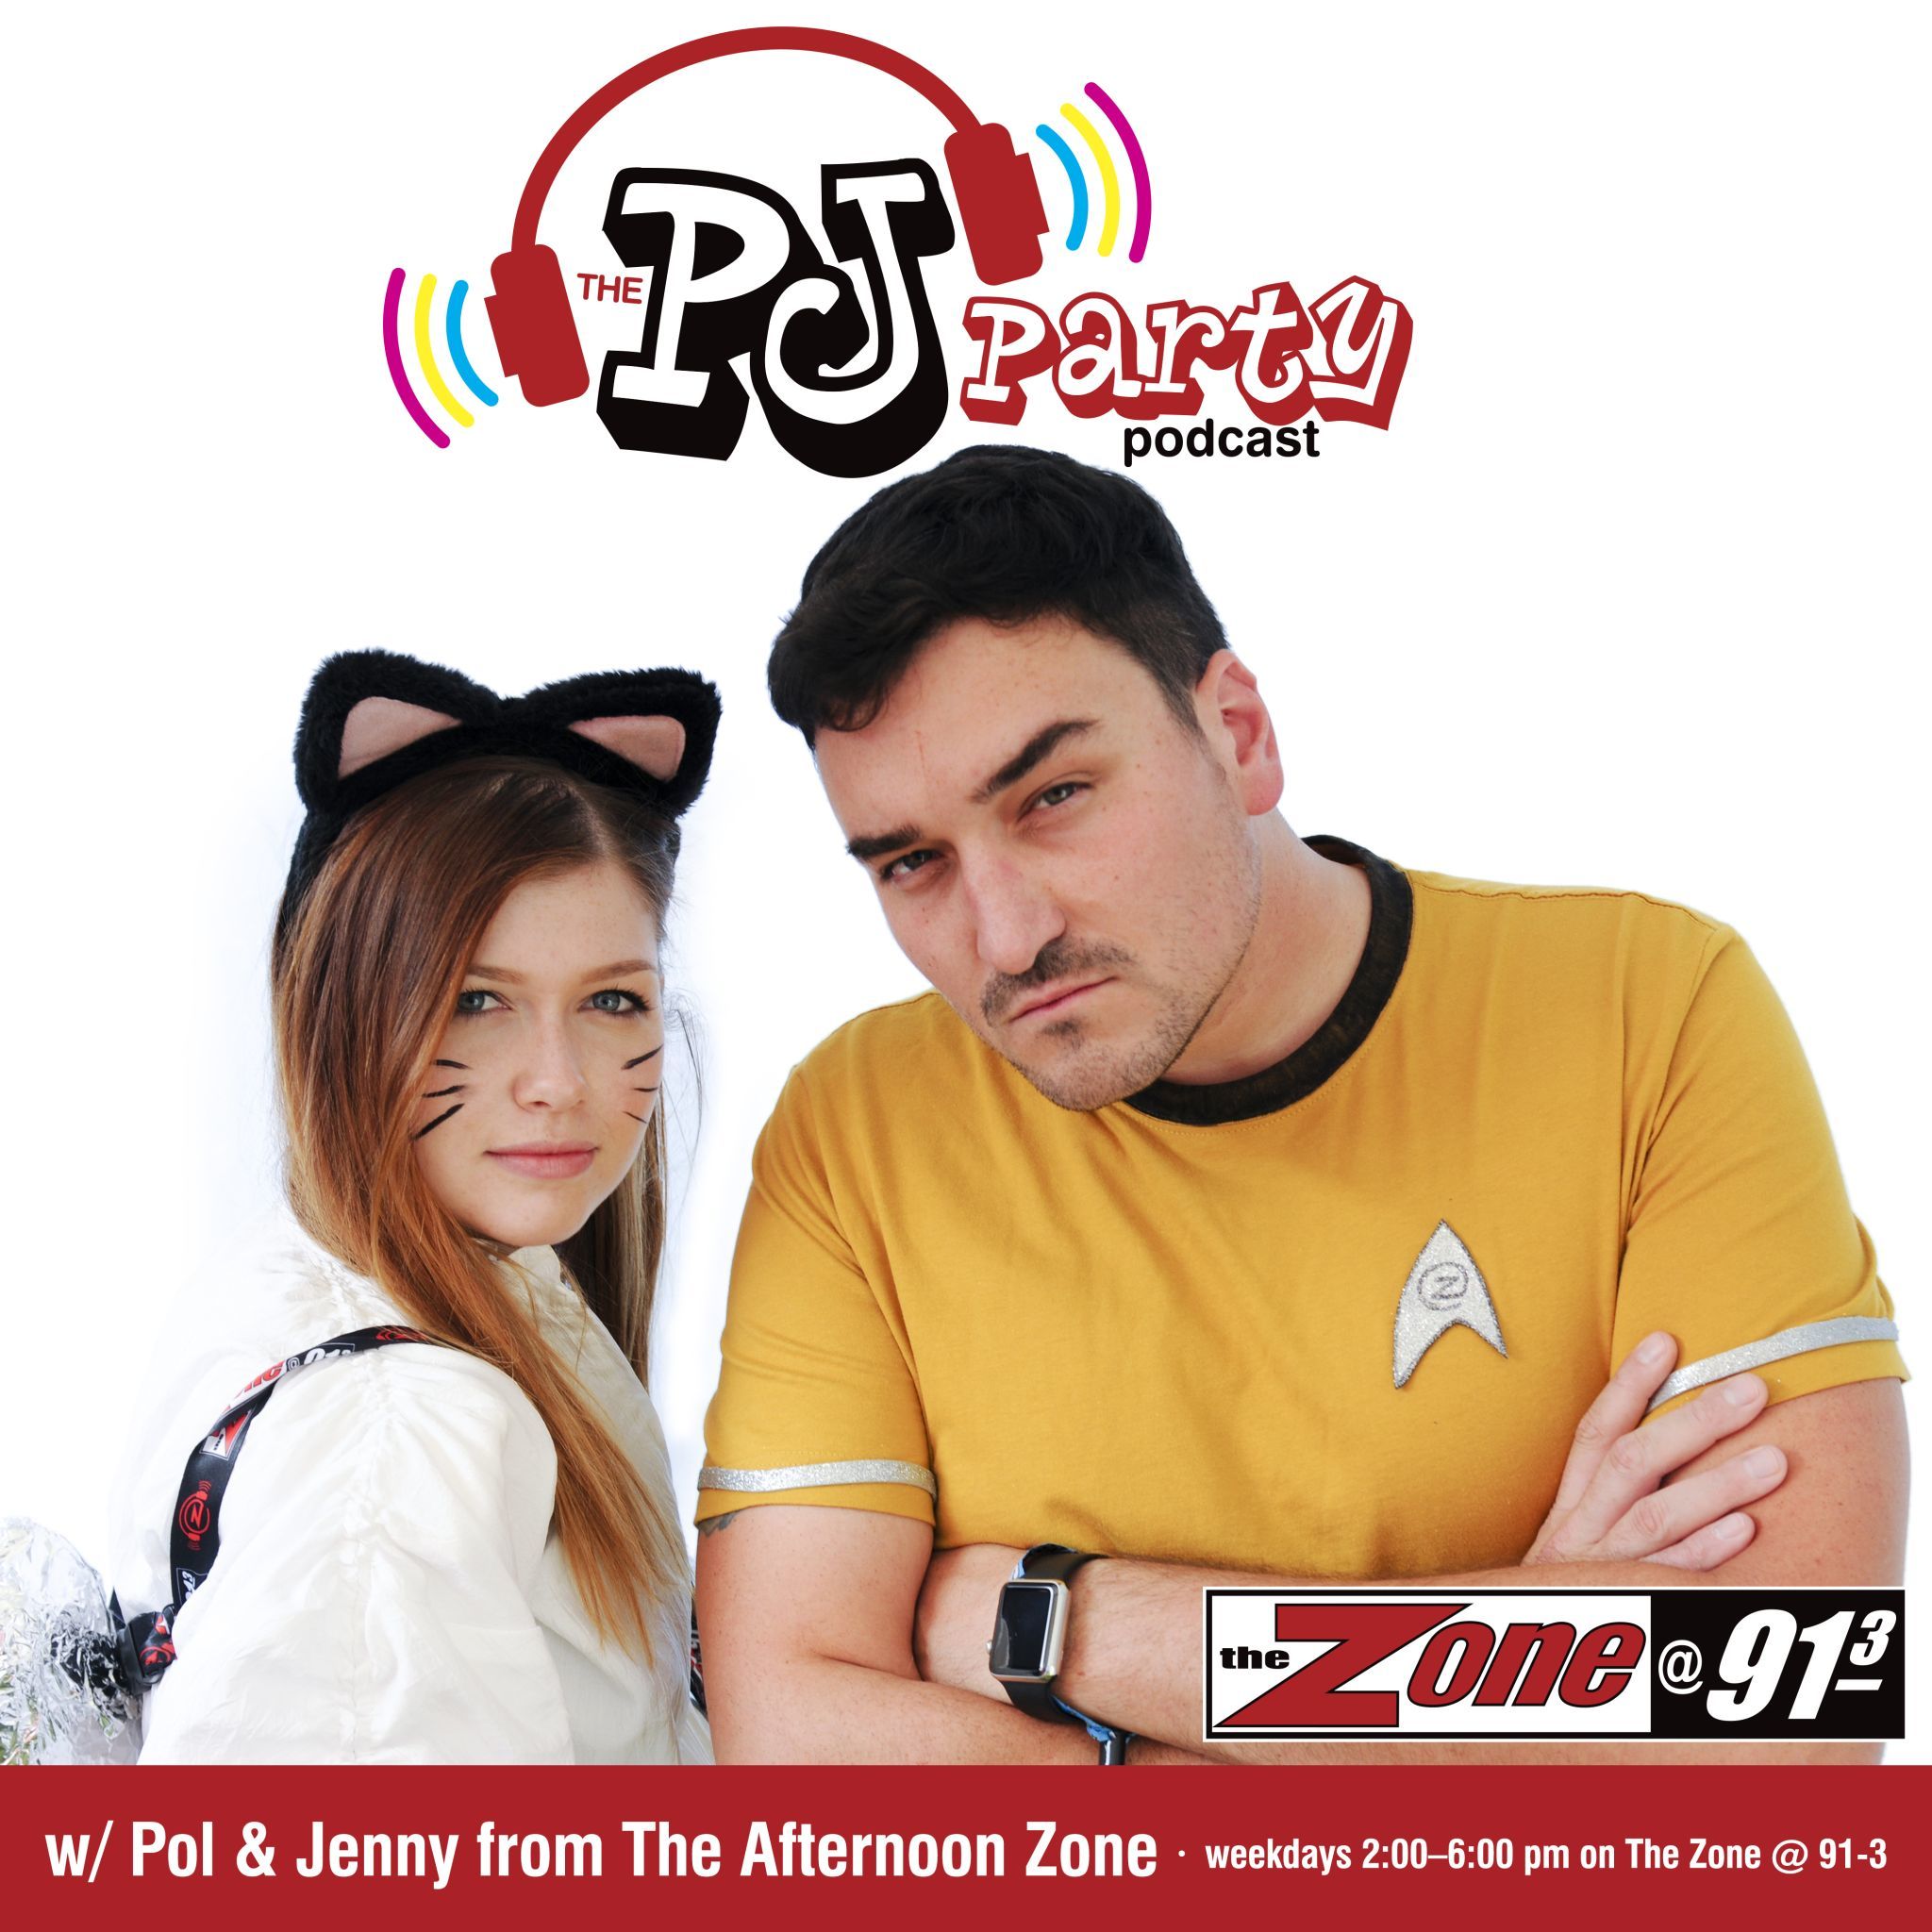 The PJ Party podcast w/ Pol & Jenny